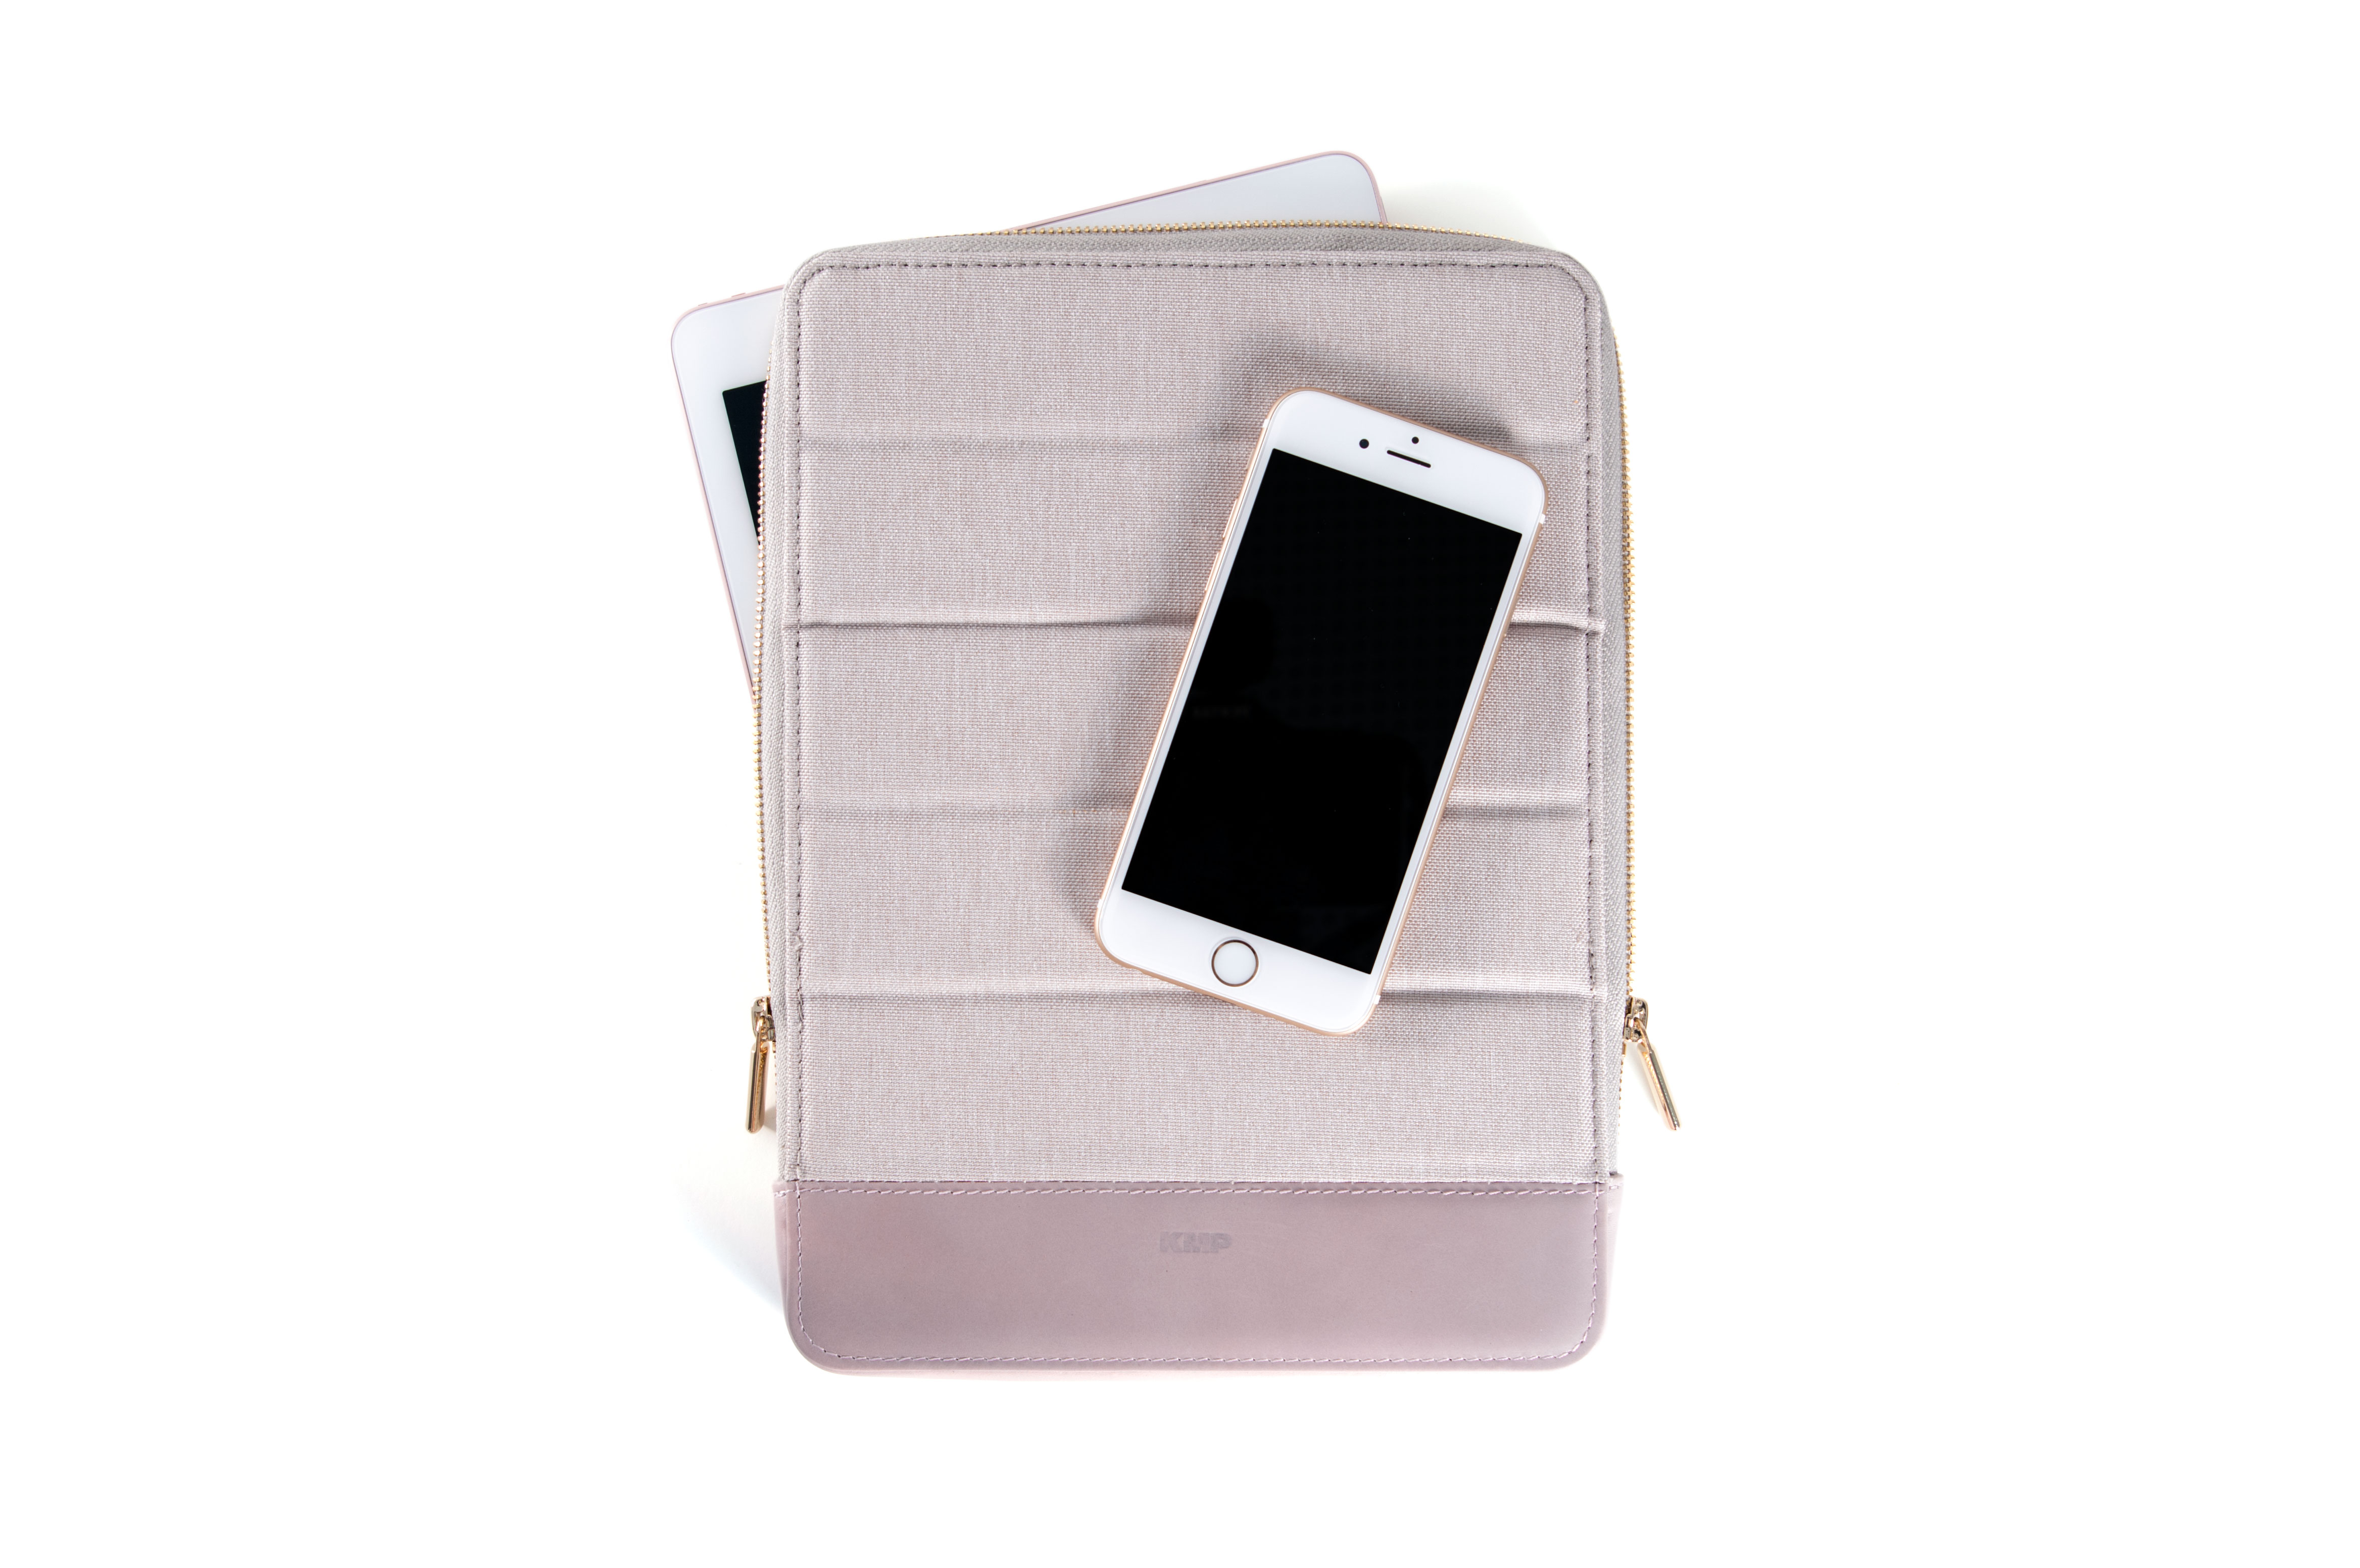 KMP Protective Case, iPad Textil, Gray/Pink 2, Sleeve gray-pink Apple Sleeve 9,7\